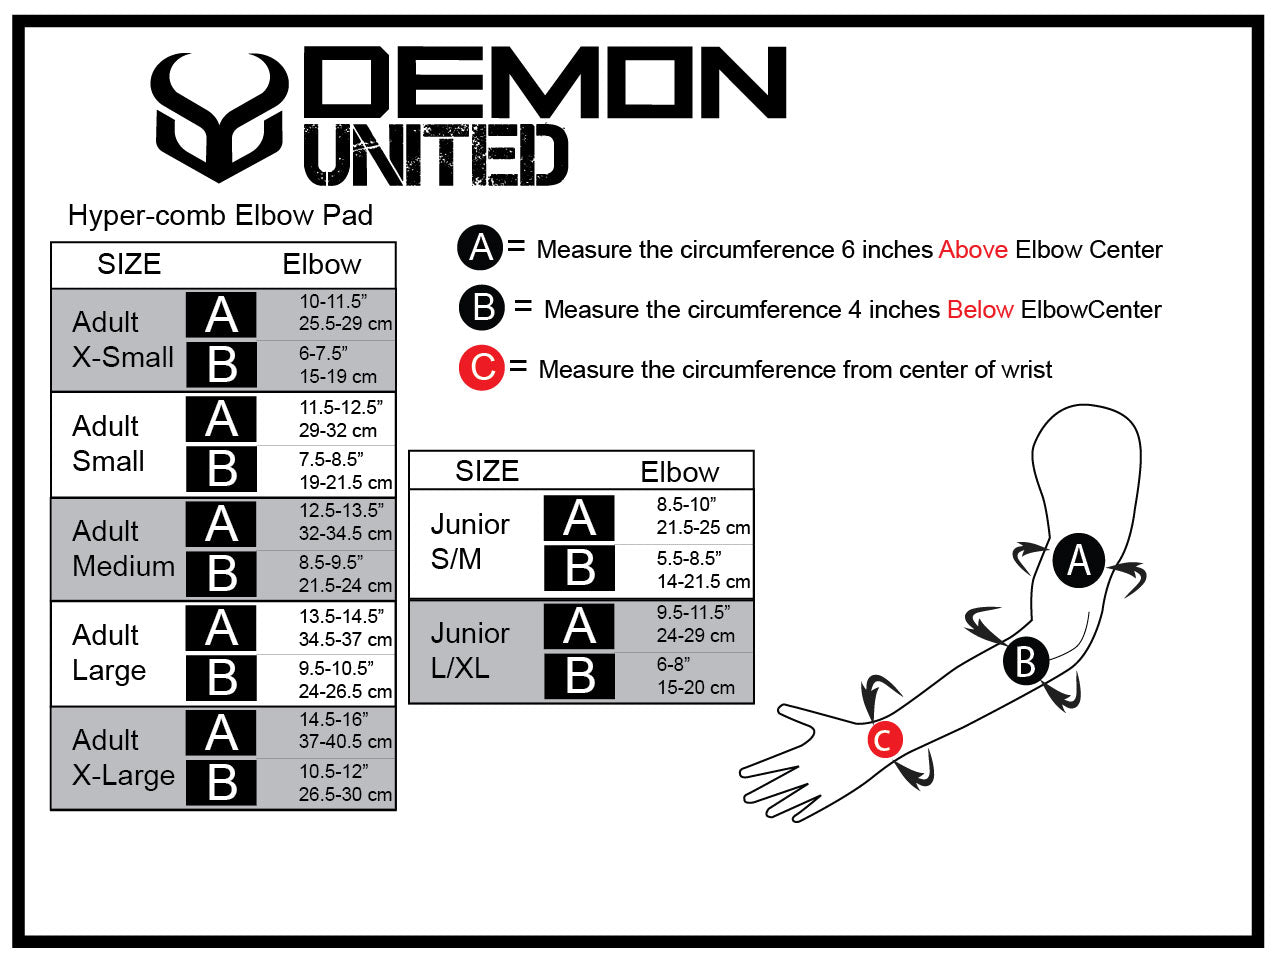 Demon United Hyper-Comb Elbow Pad